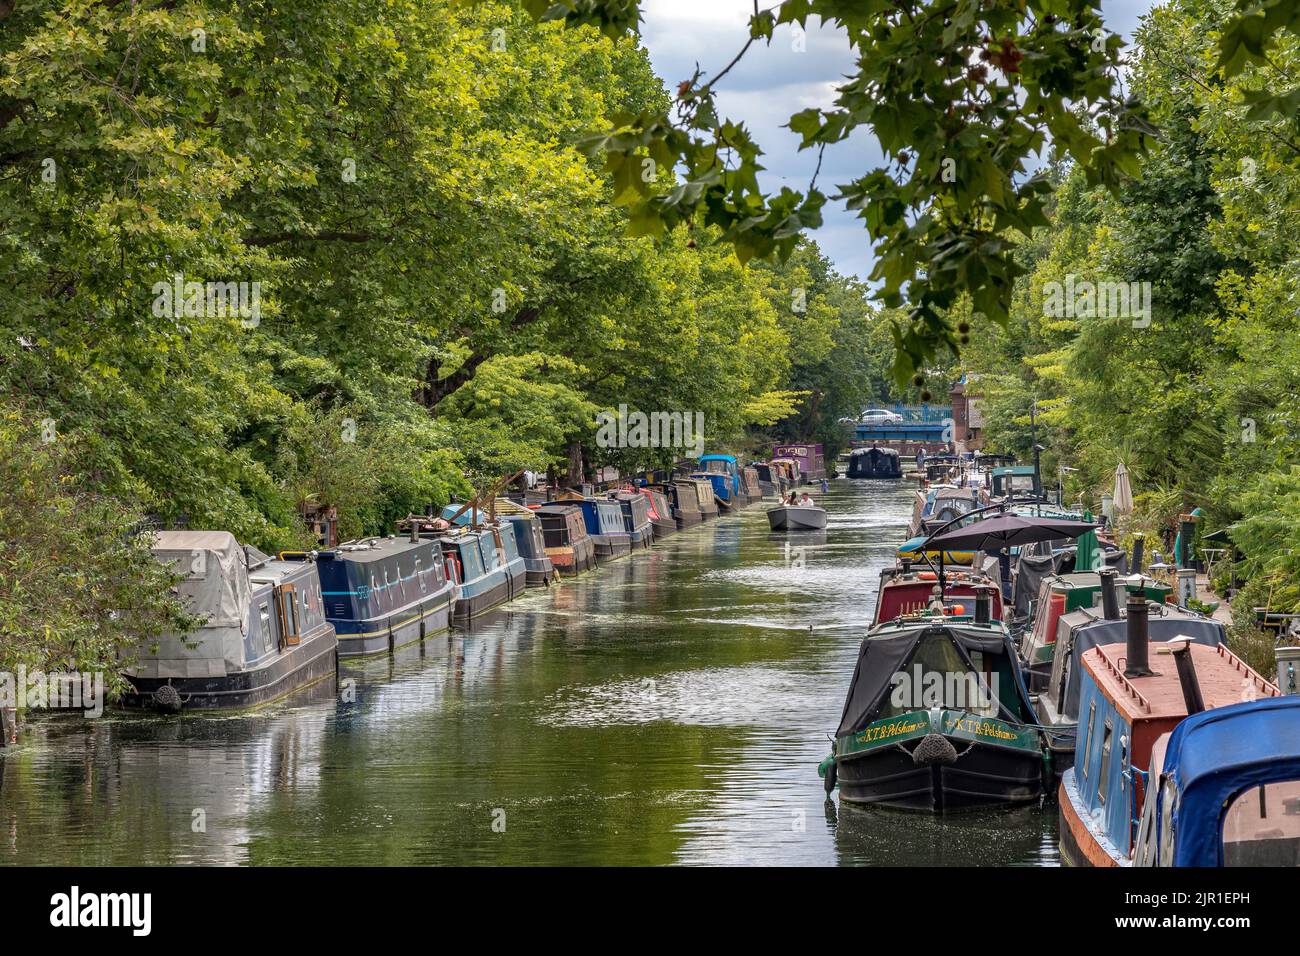 A long line of narrow boats moored along the banks of the Regents Canal, near Little Venice, running alongside Blomfield Road, Maida Vale, London W9 Stock Photo